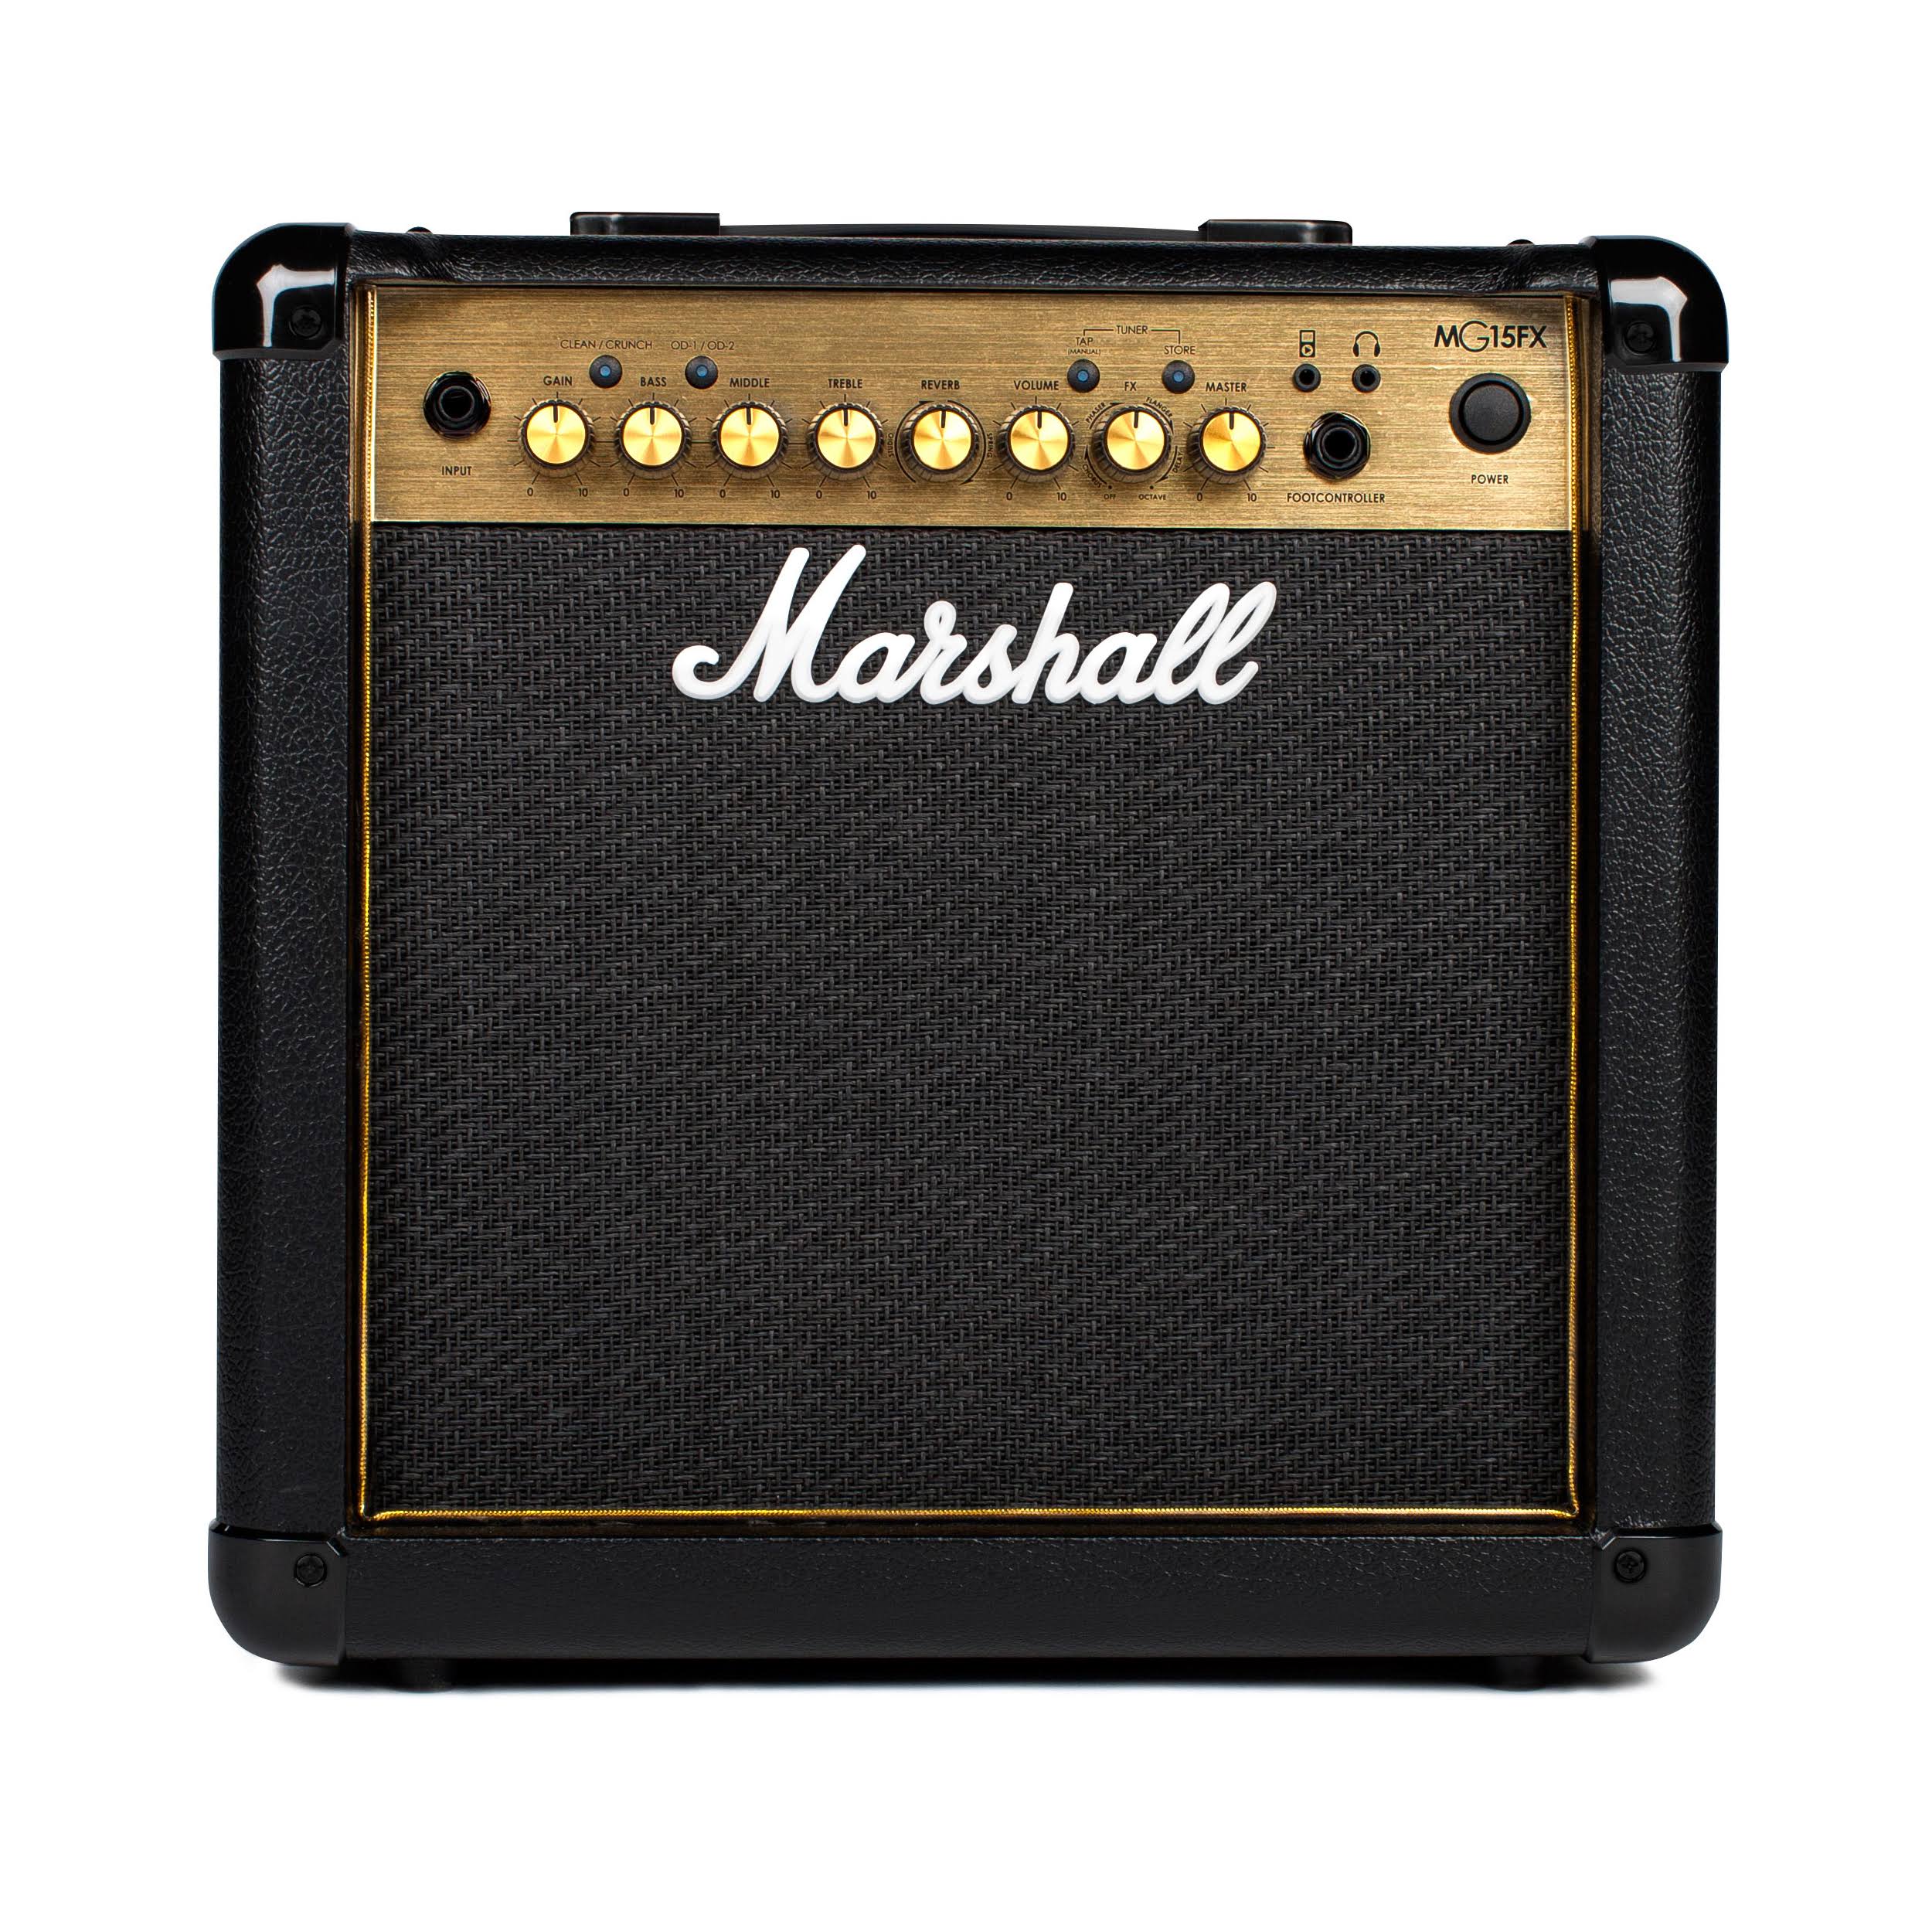 Marshall Combo Guitar Amplifier - 15W